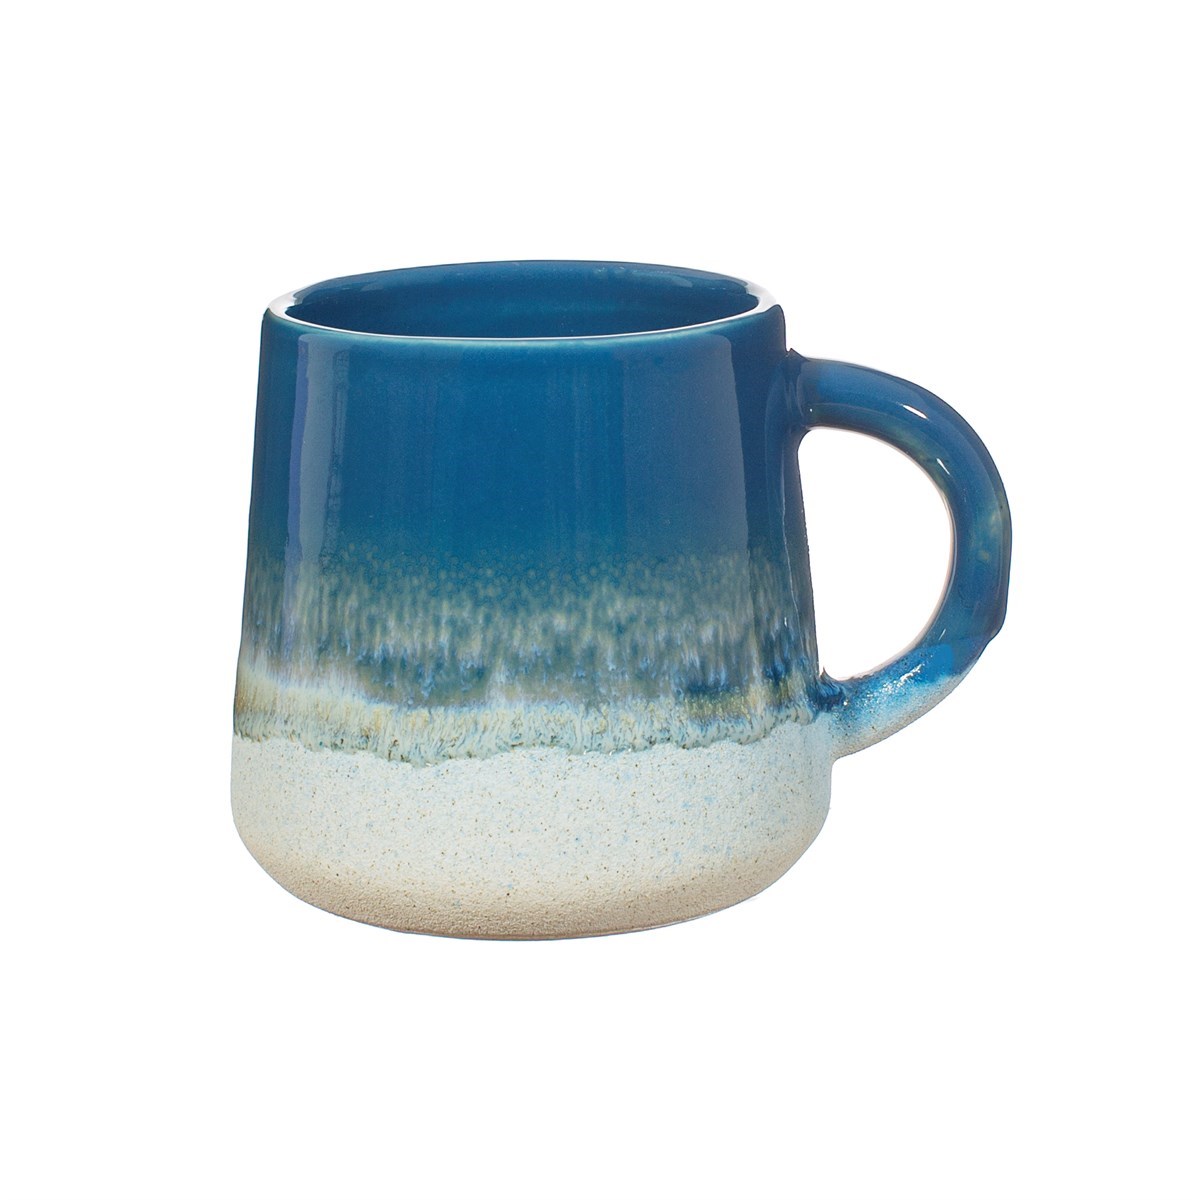 Sass & Belle Mojave Glaze Matte Green Reactive Glaze Speckled Stoneware Mug